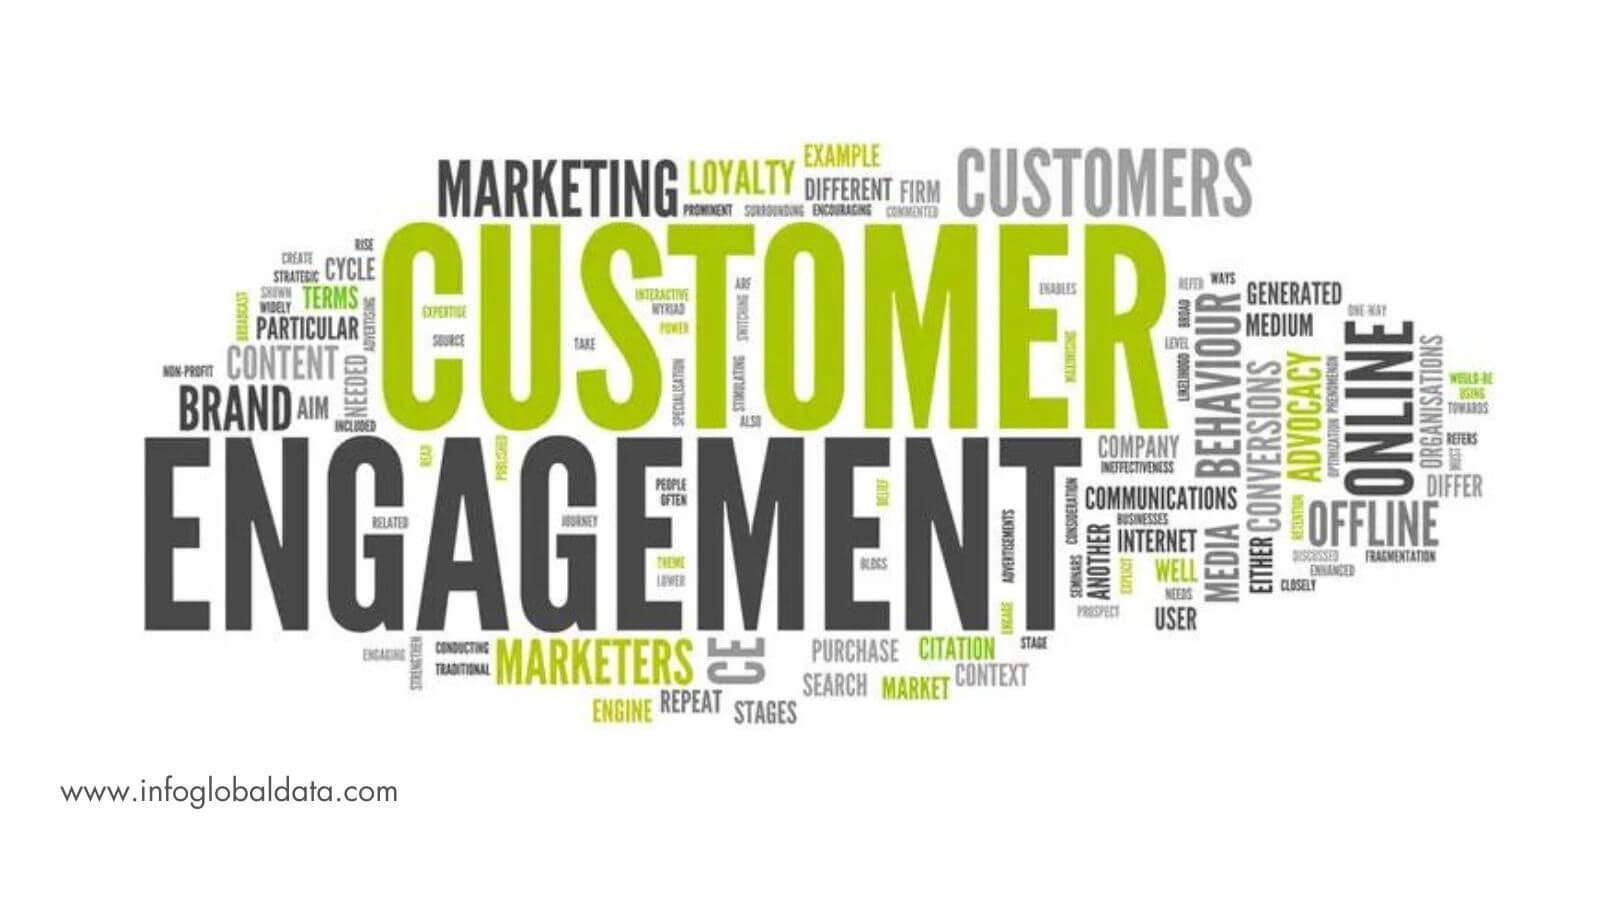 enhanced customer engagement